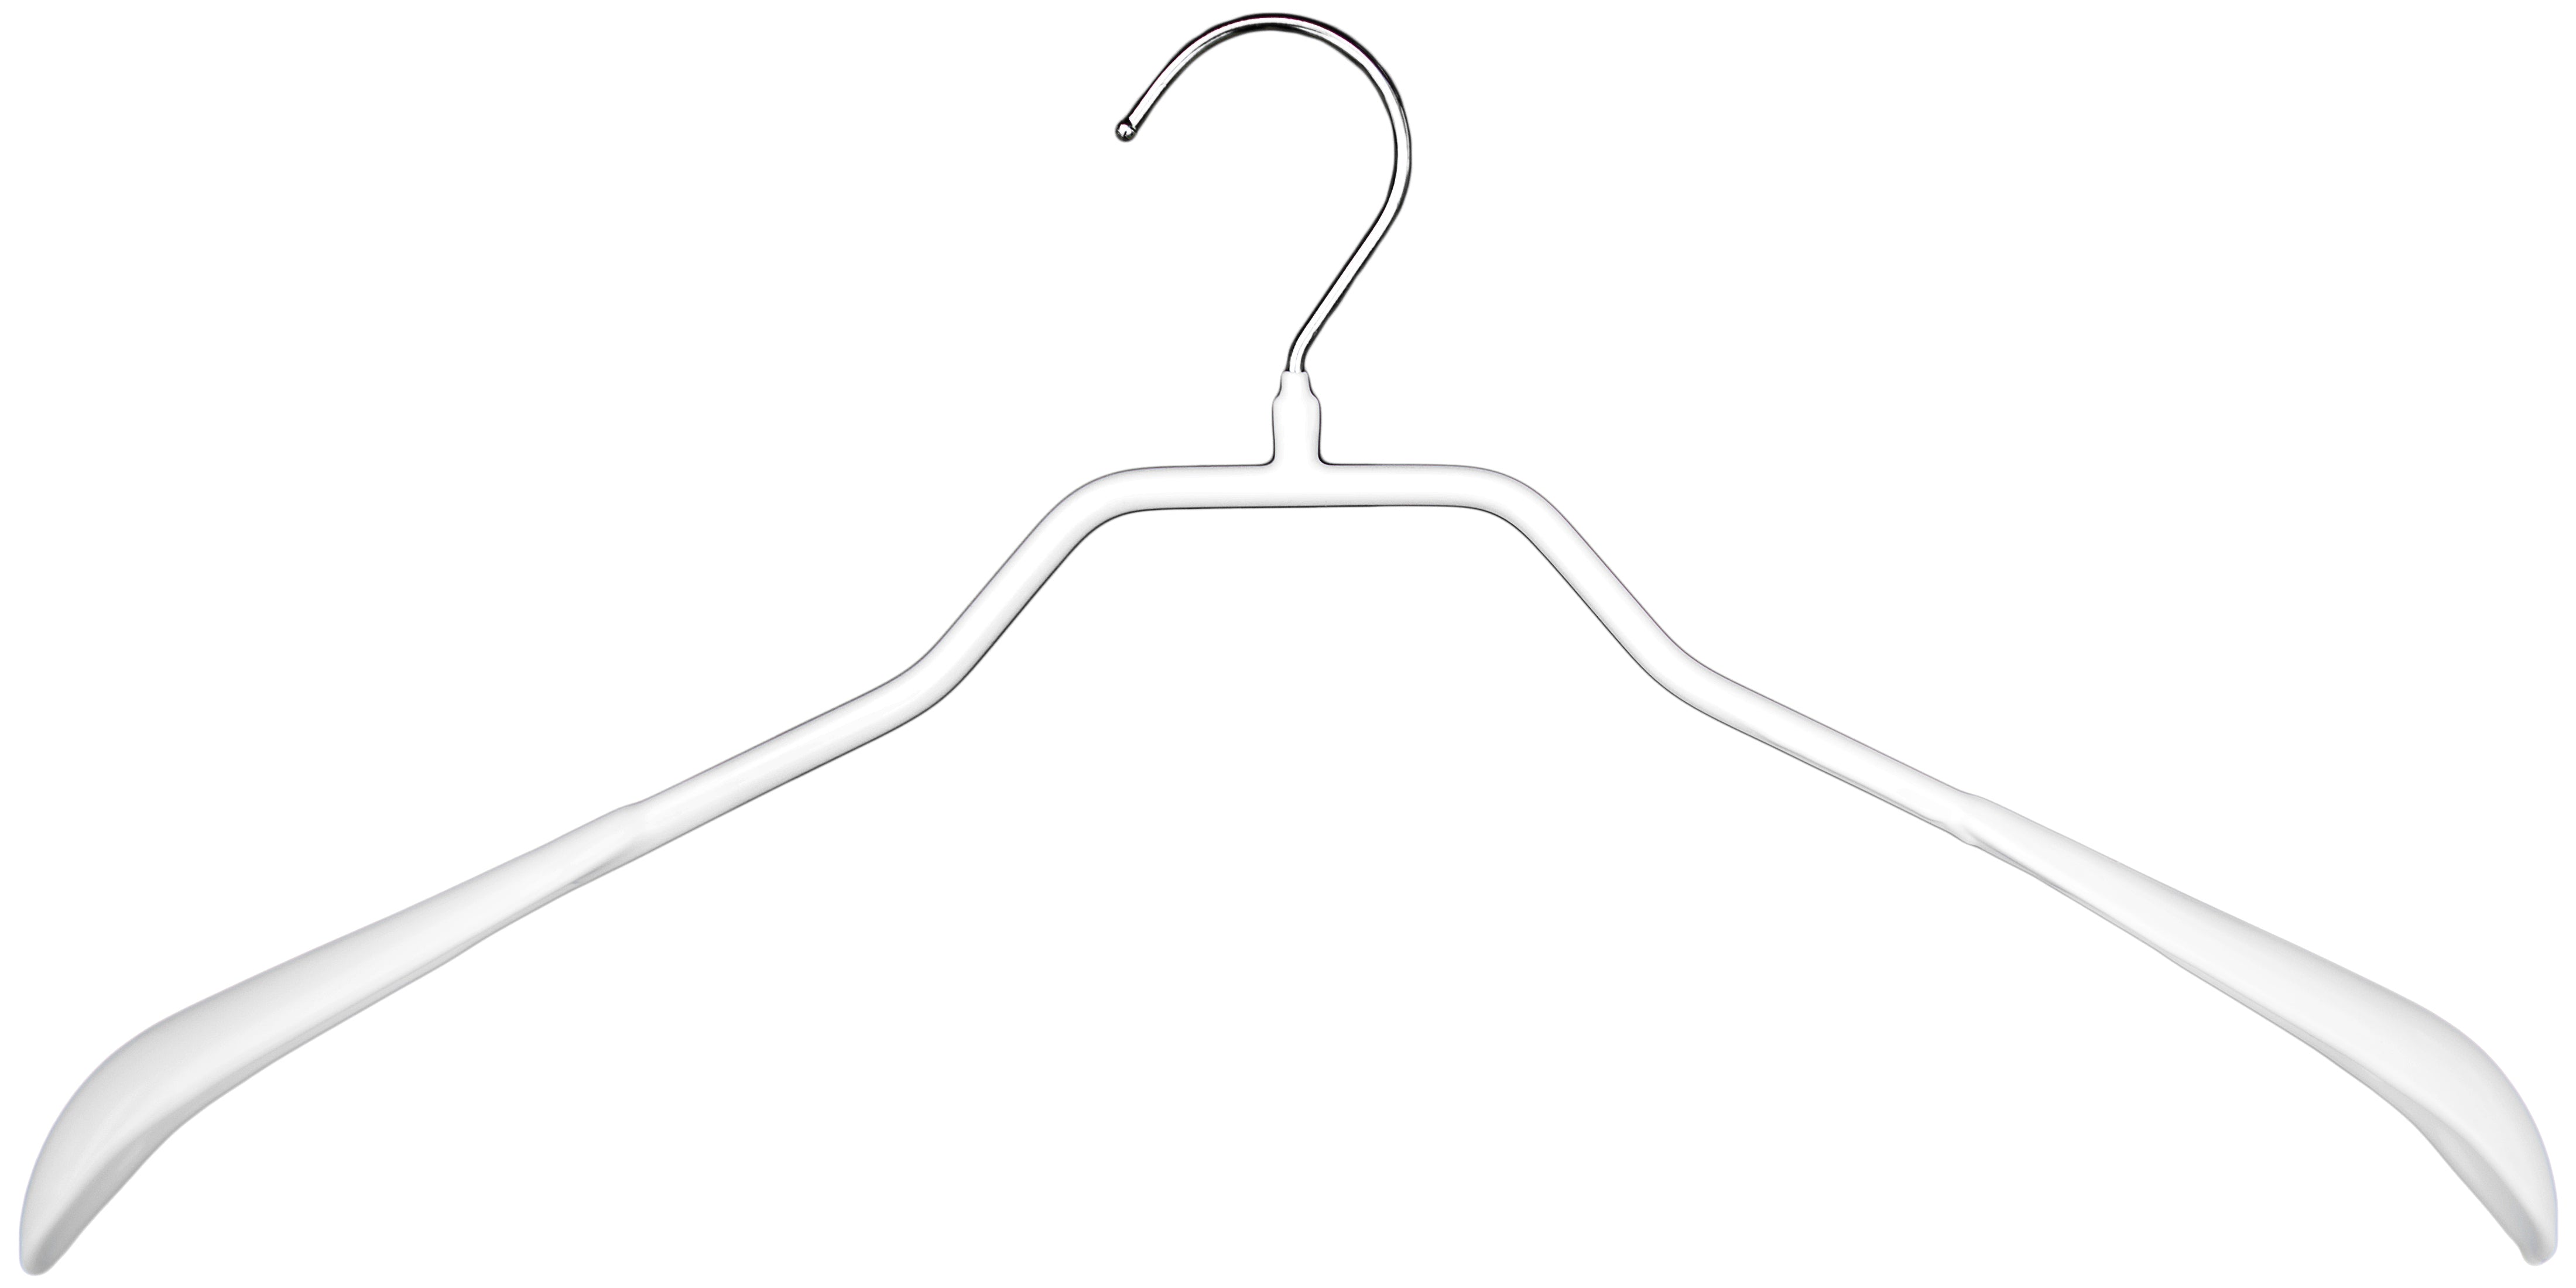 Mawa Bodyform Shape Clothing Hanger with Wide Shoulder Support, Set of 5 - Black/Silver